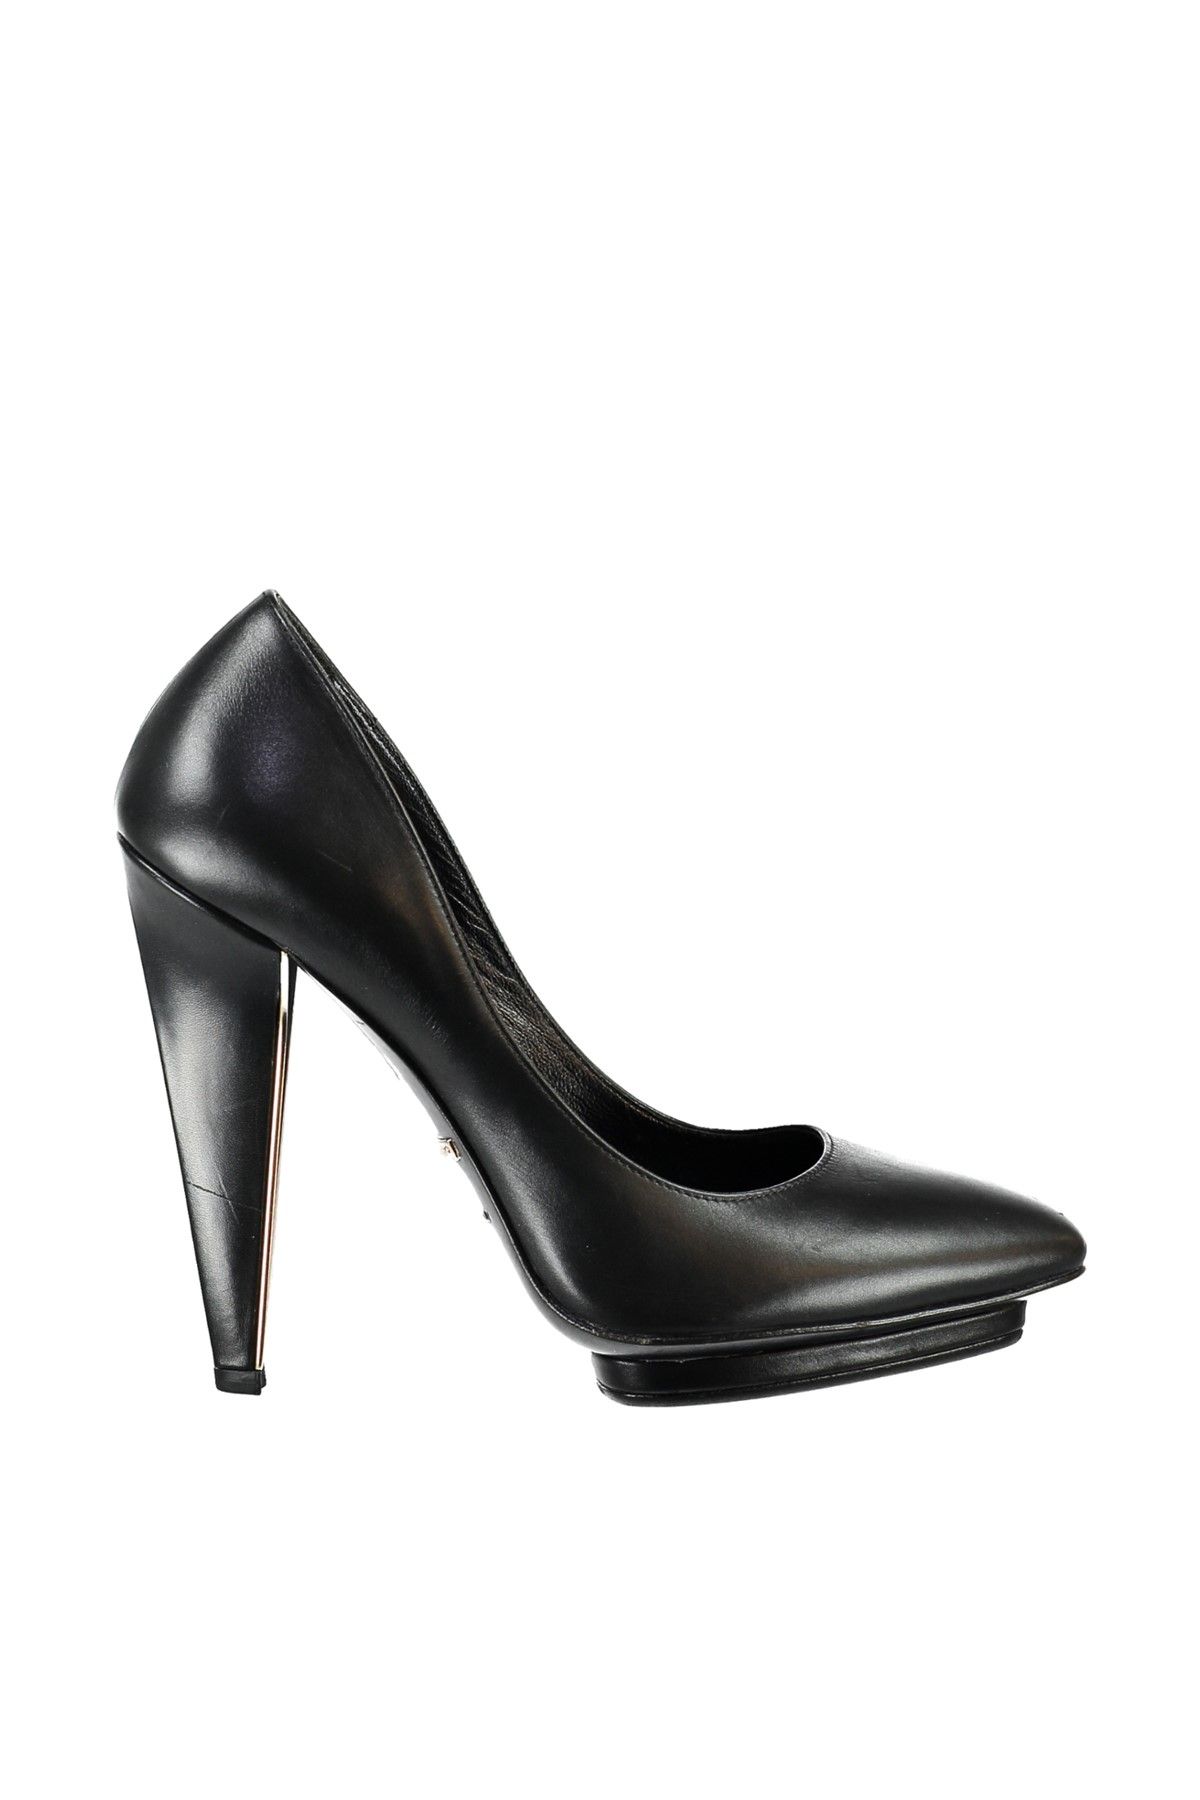 Roberto Cavalli Kadın Siyah Topuklu Ayakkabı YDS622PZ479